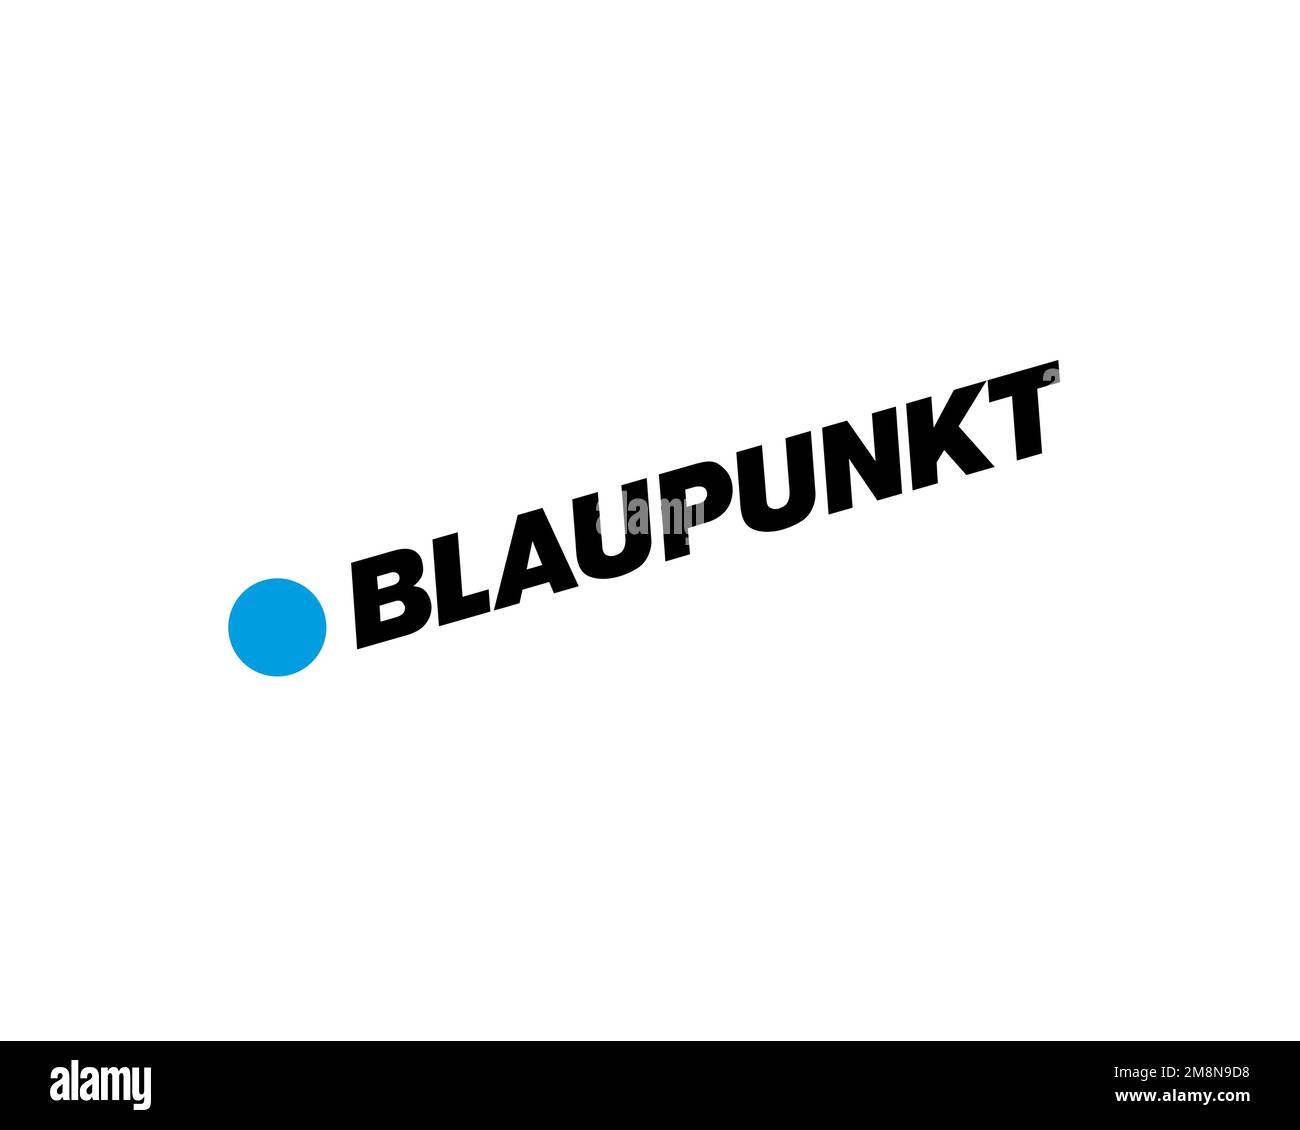 Blaupunkt, rotated logo, white background Stock Photo